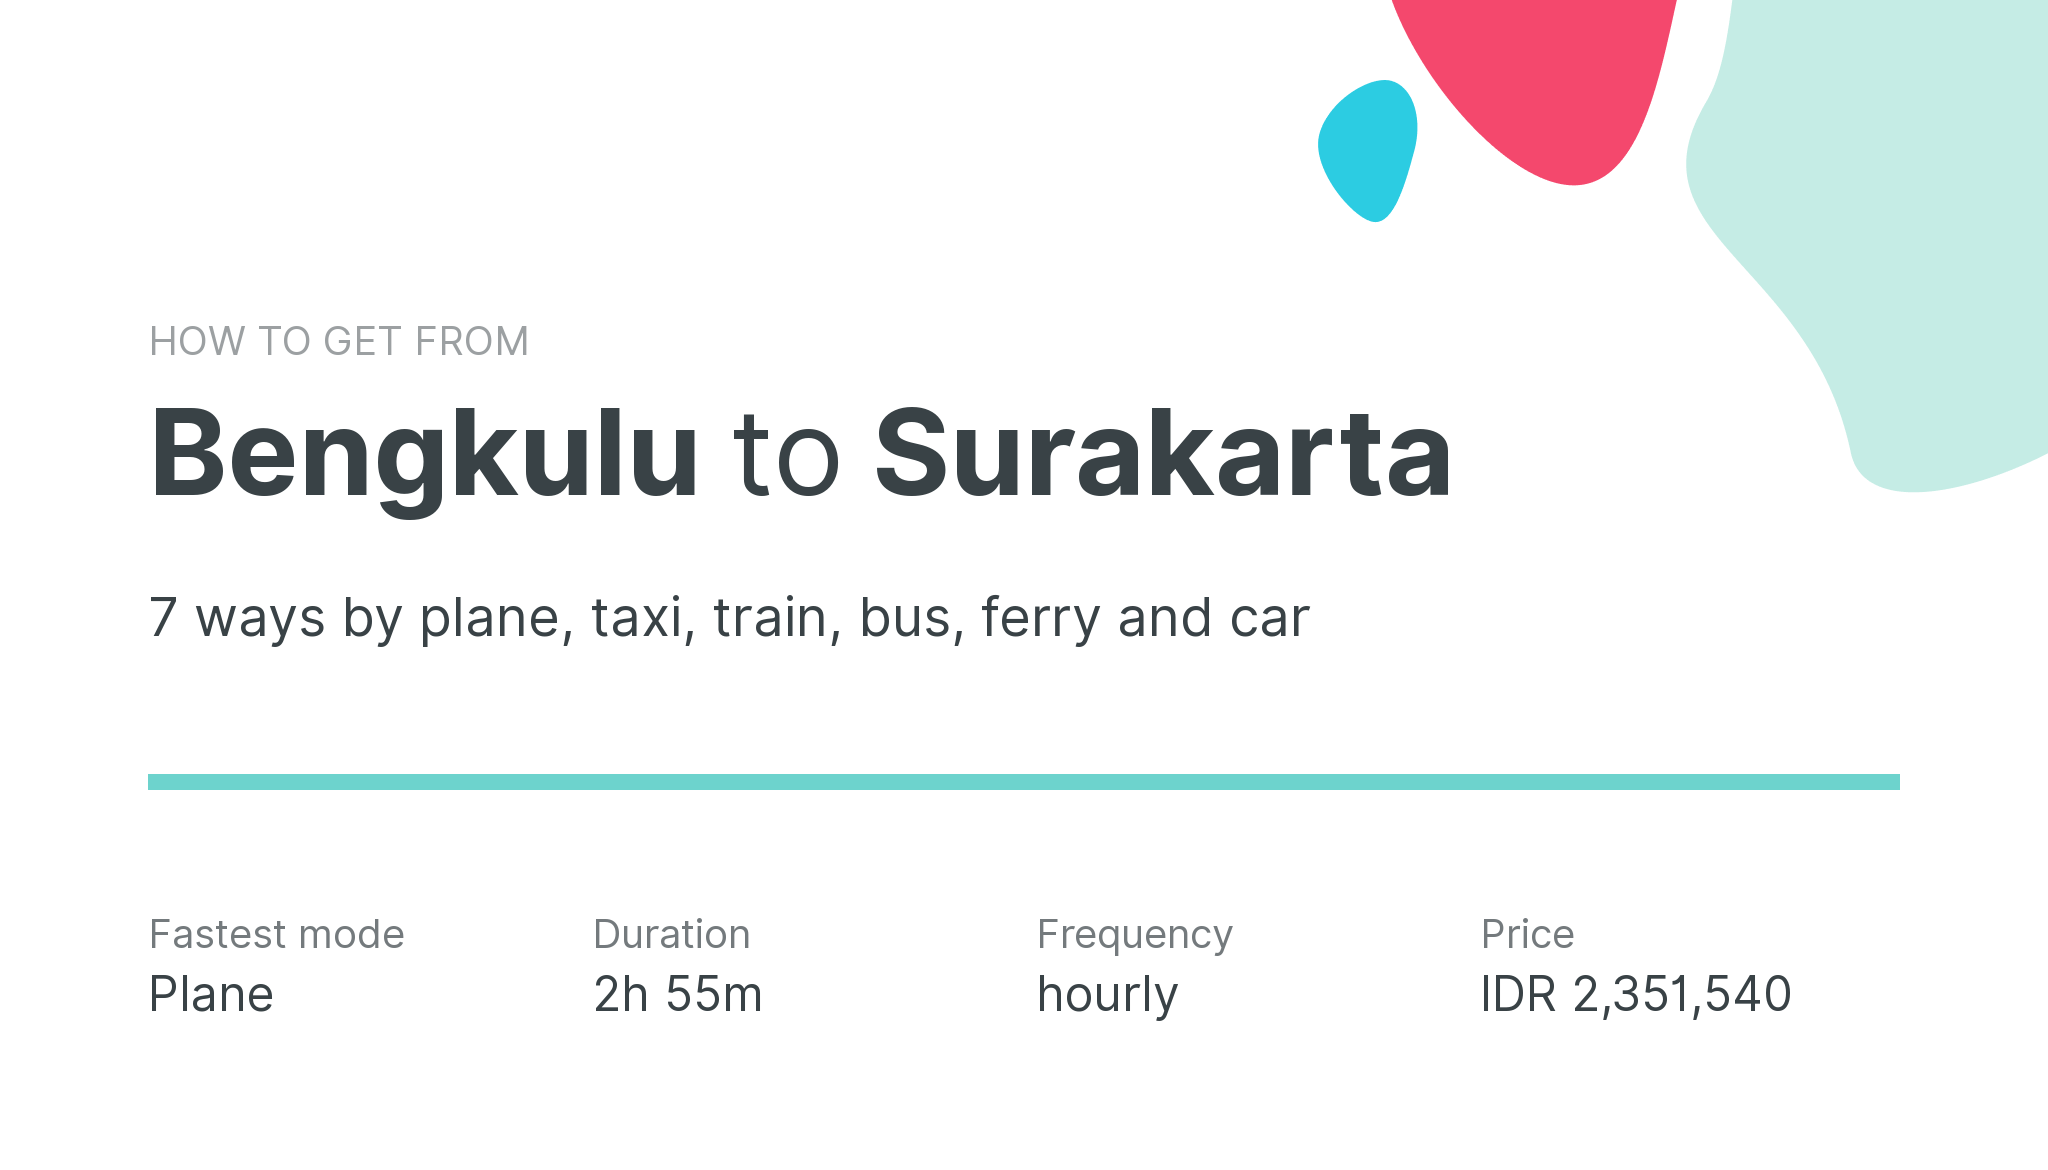 How do I get from Bengkulu to Surakarta